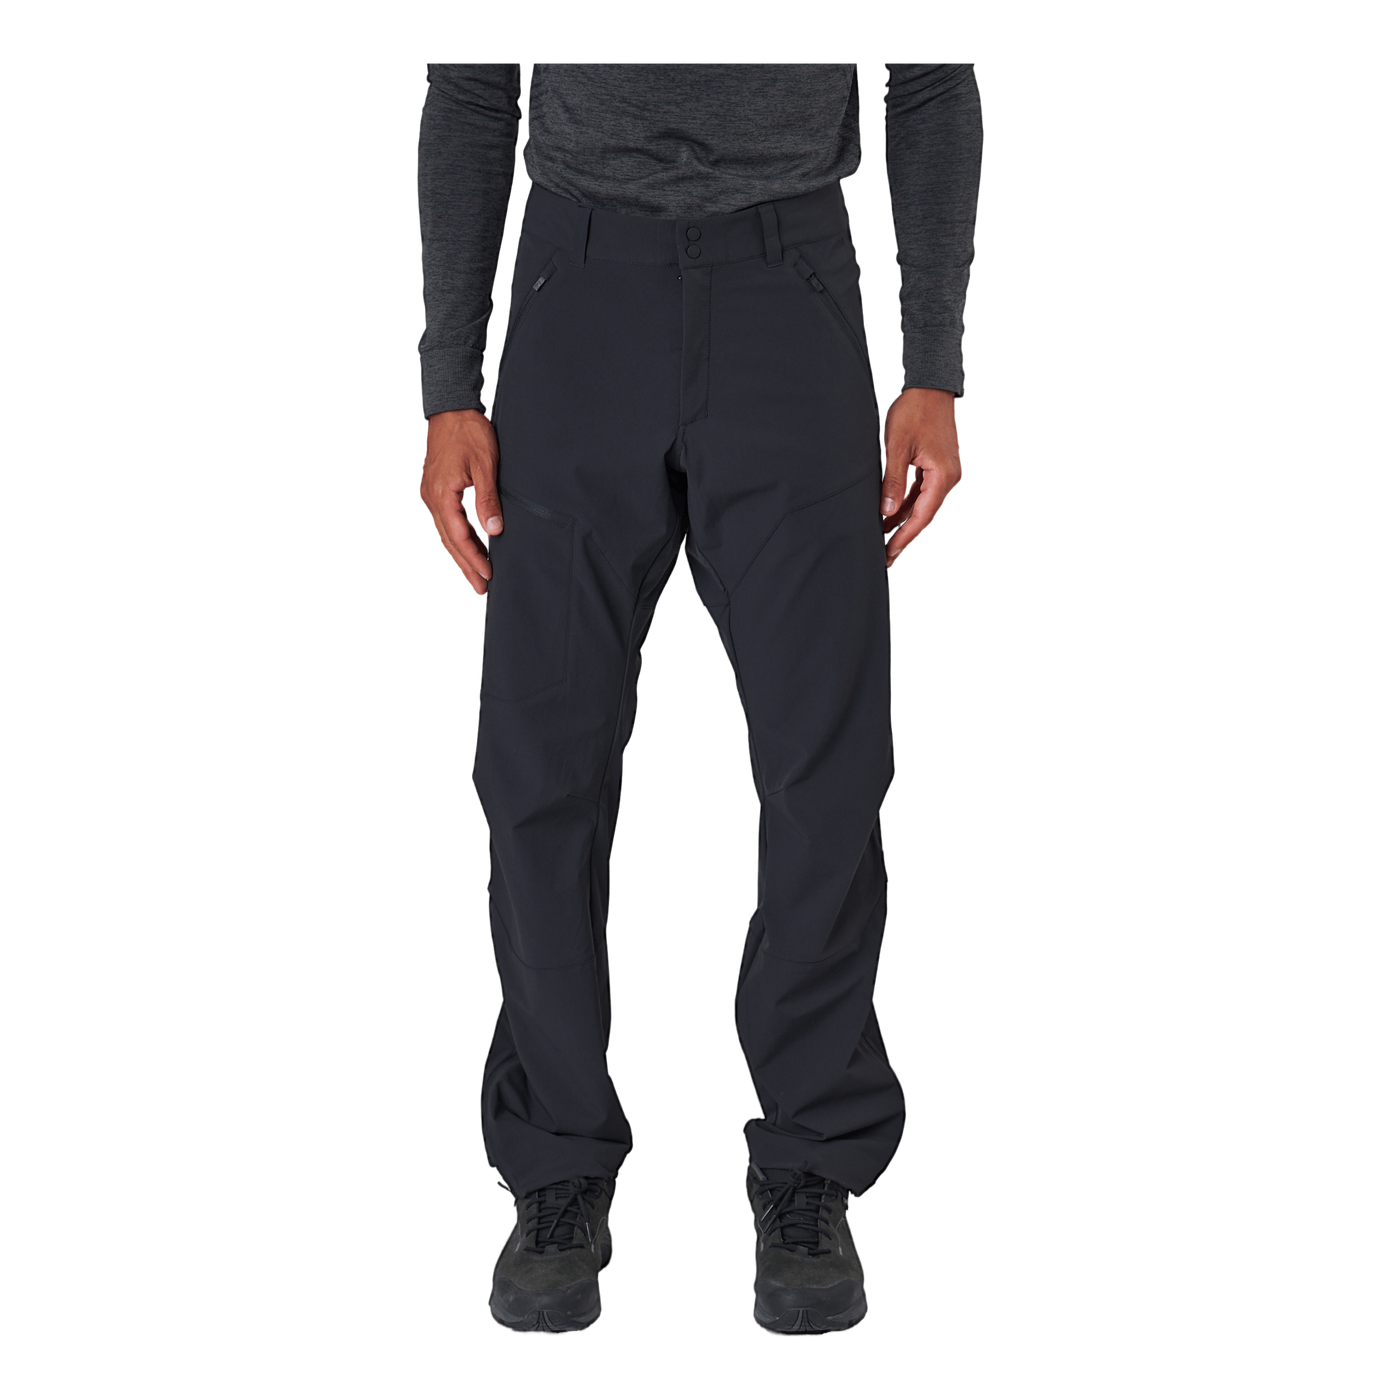 Technical pants Intimates Sixs Superlight Carbon Black For Sale Online -  Outletmoto.eu